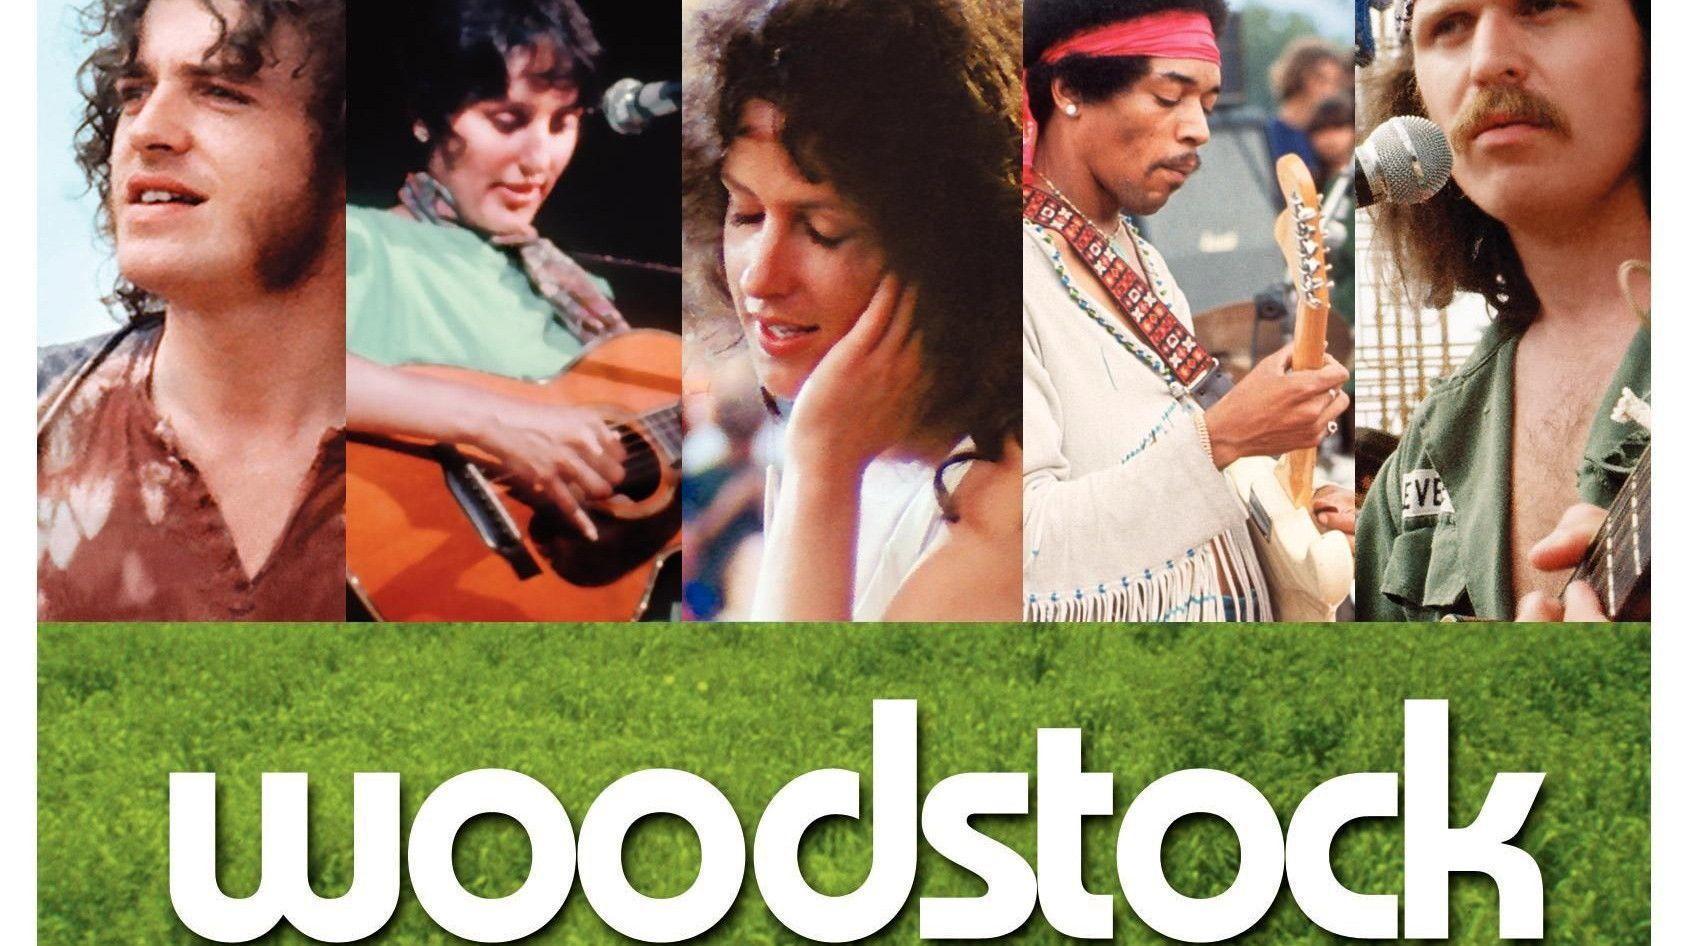 Wallpaper Woodstock 1024x768 #woodstock